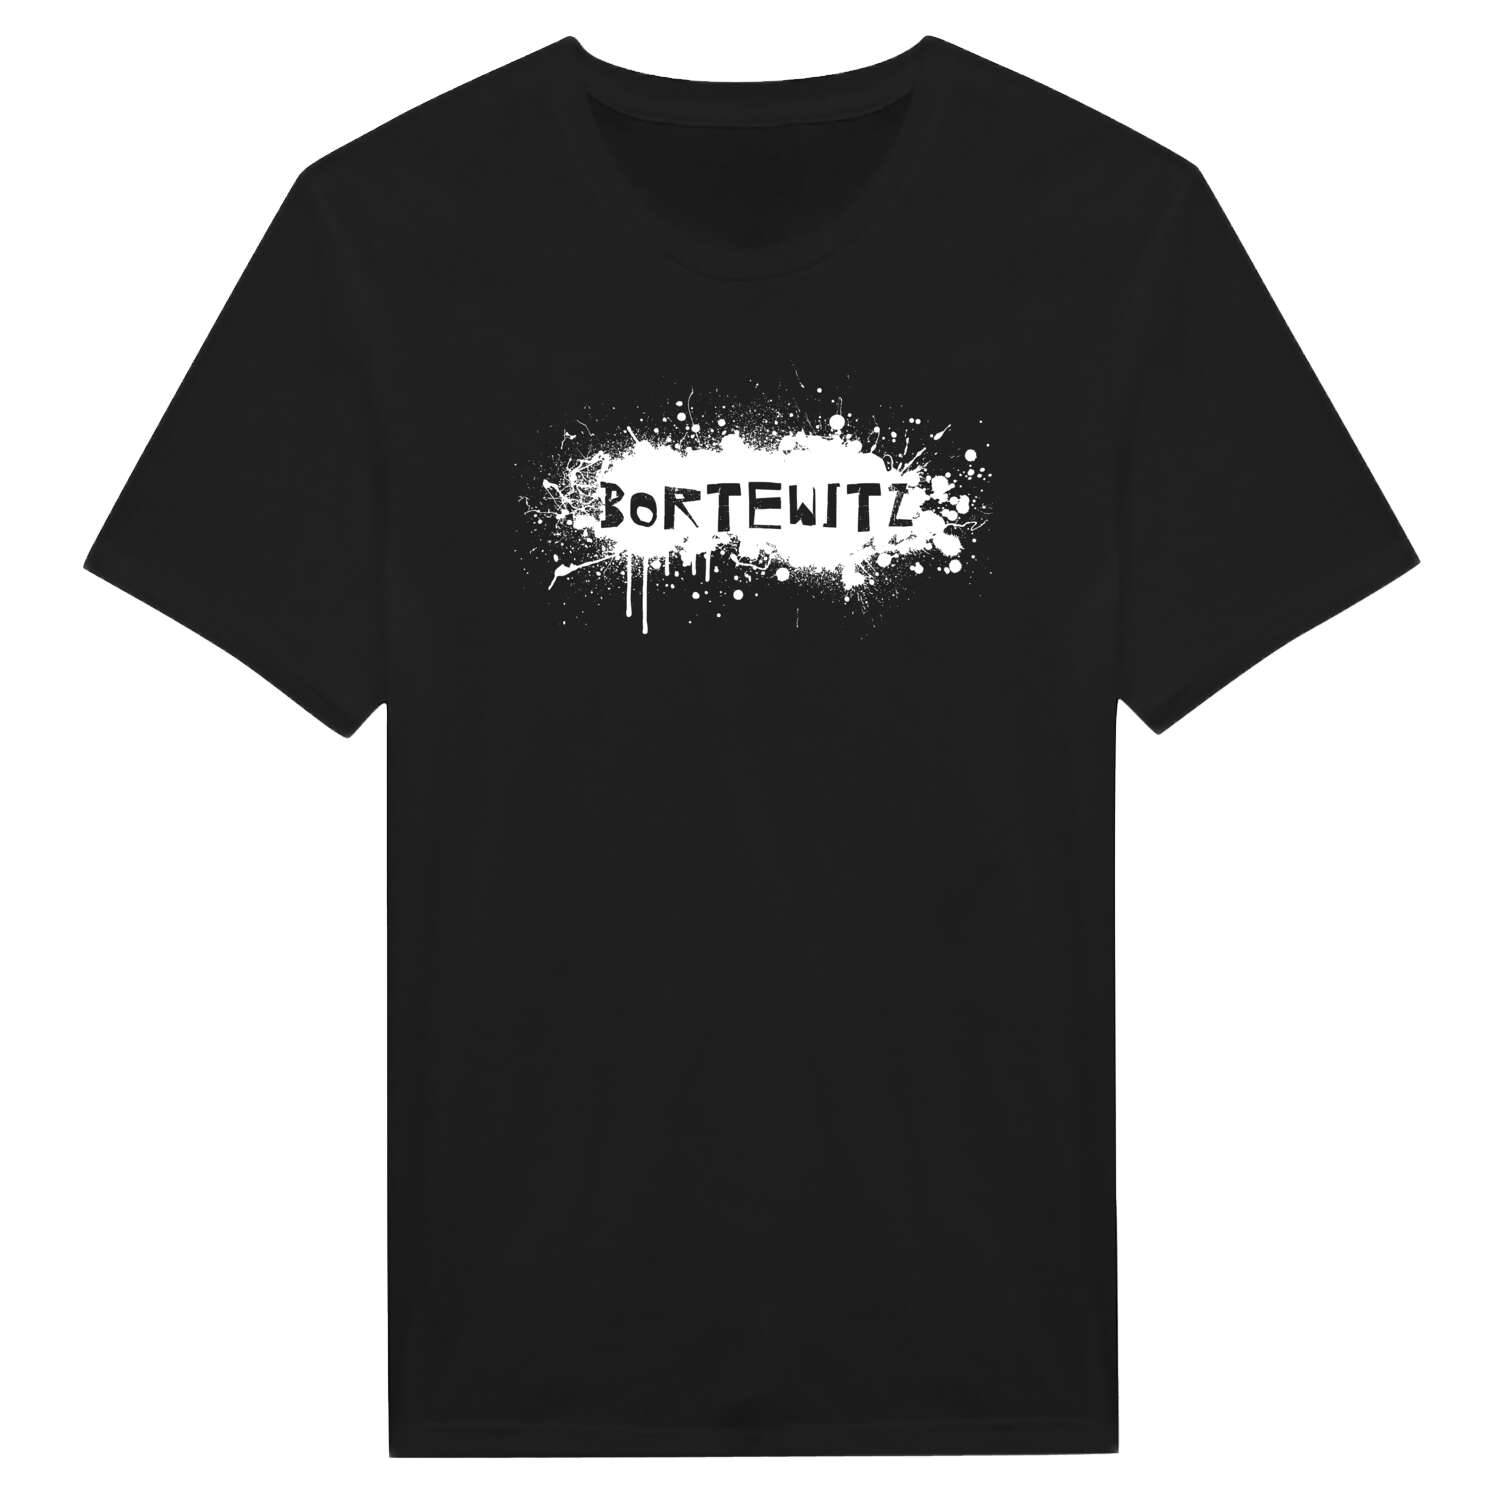 Bortewitz T-Shirt »Paint Splash Punk«